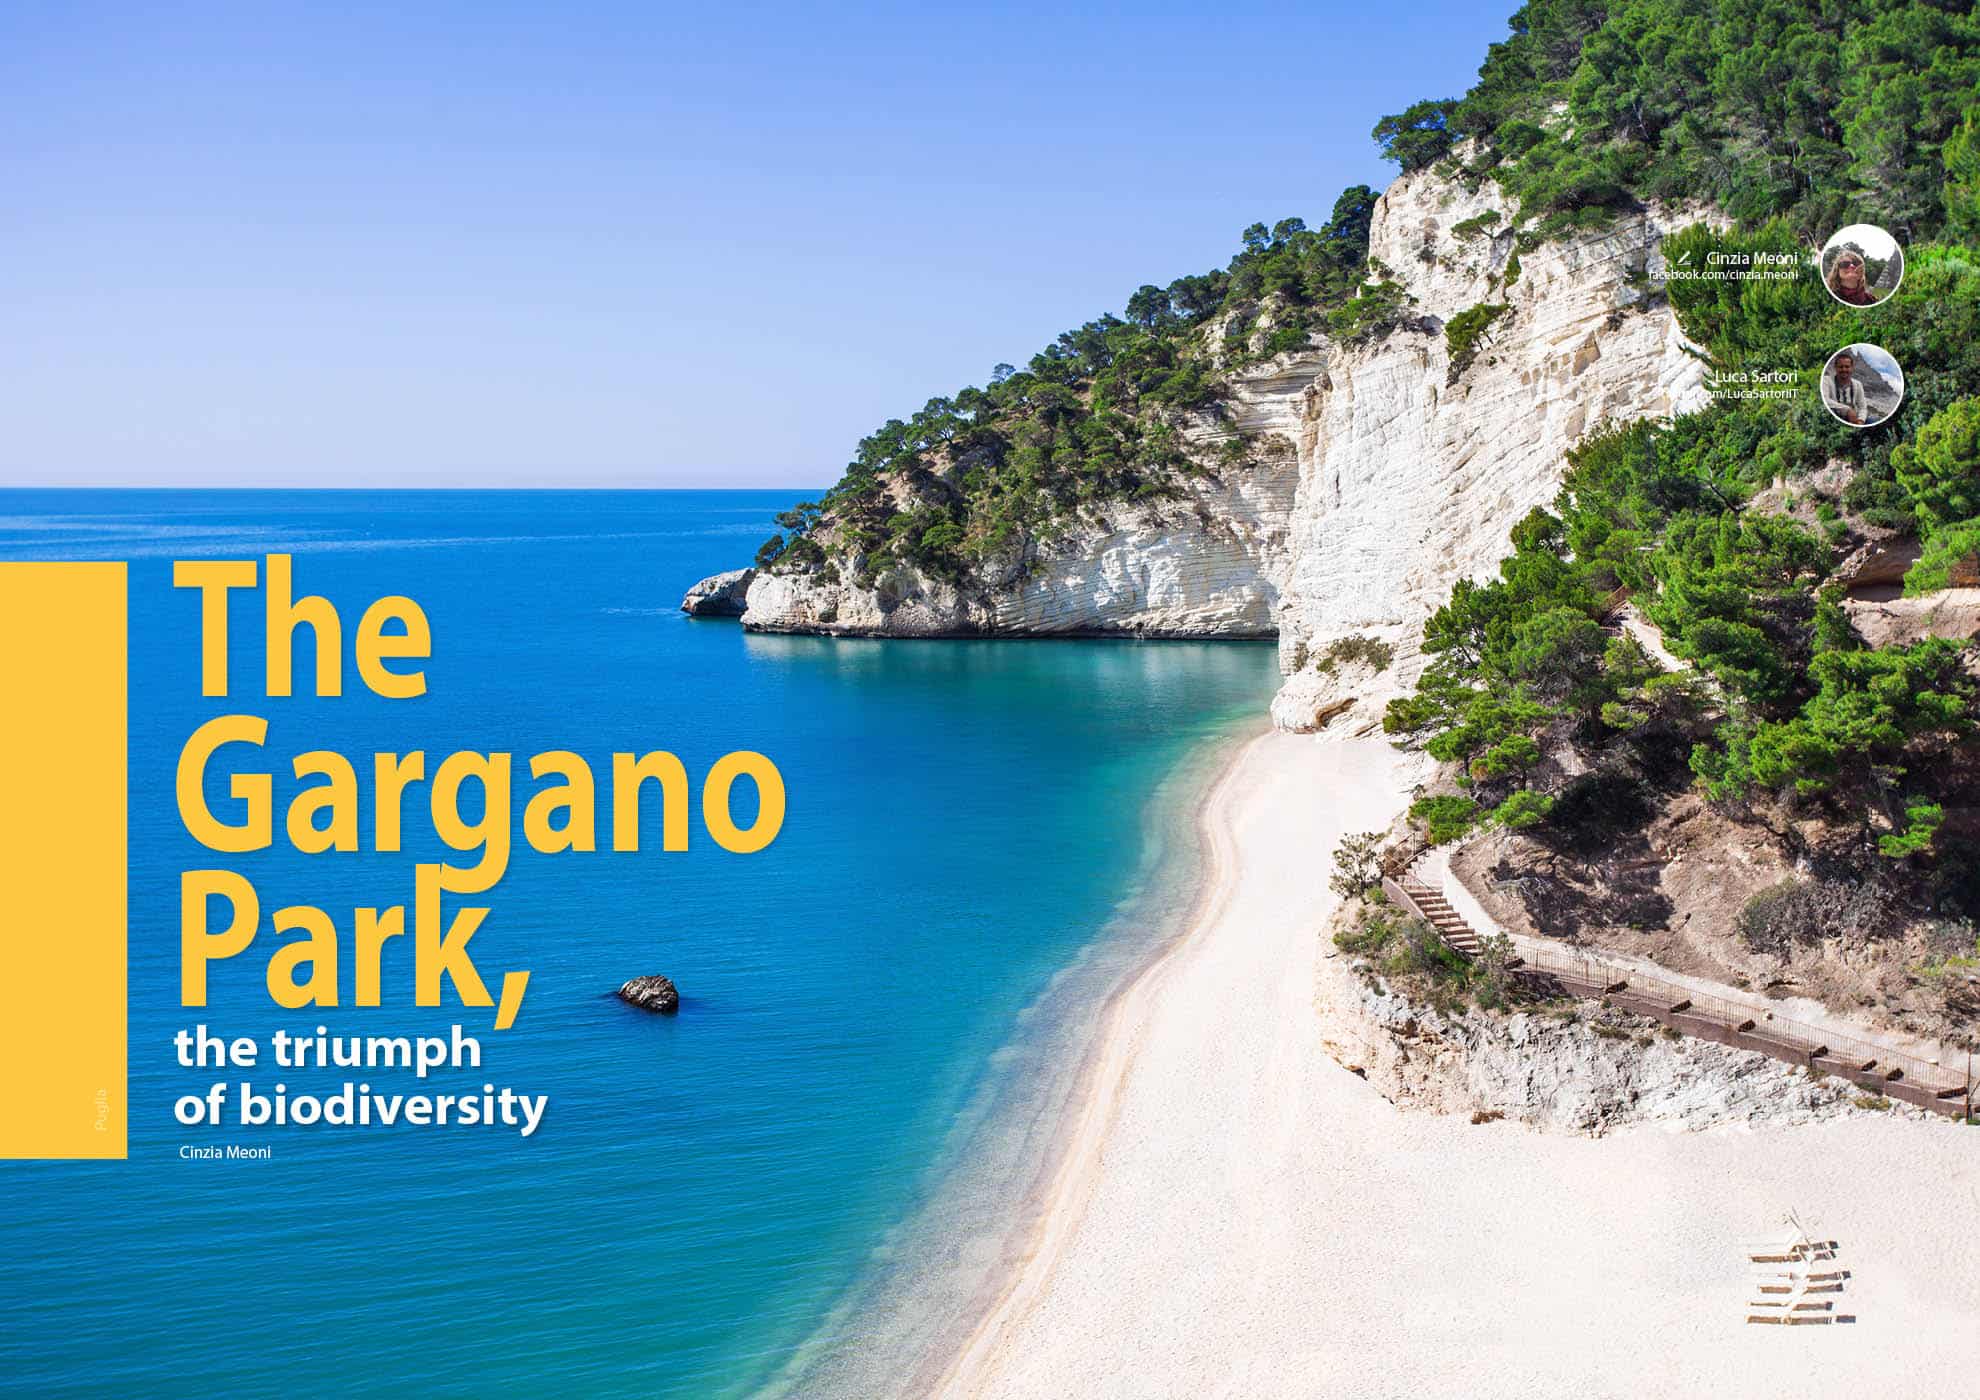 e-borghi travel 3: Parks and villages - The Gargano Park, the triumph of biodiversity